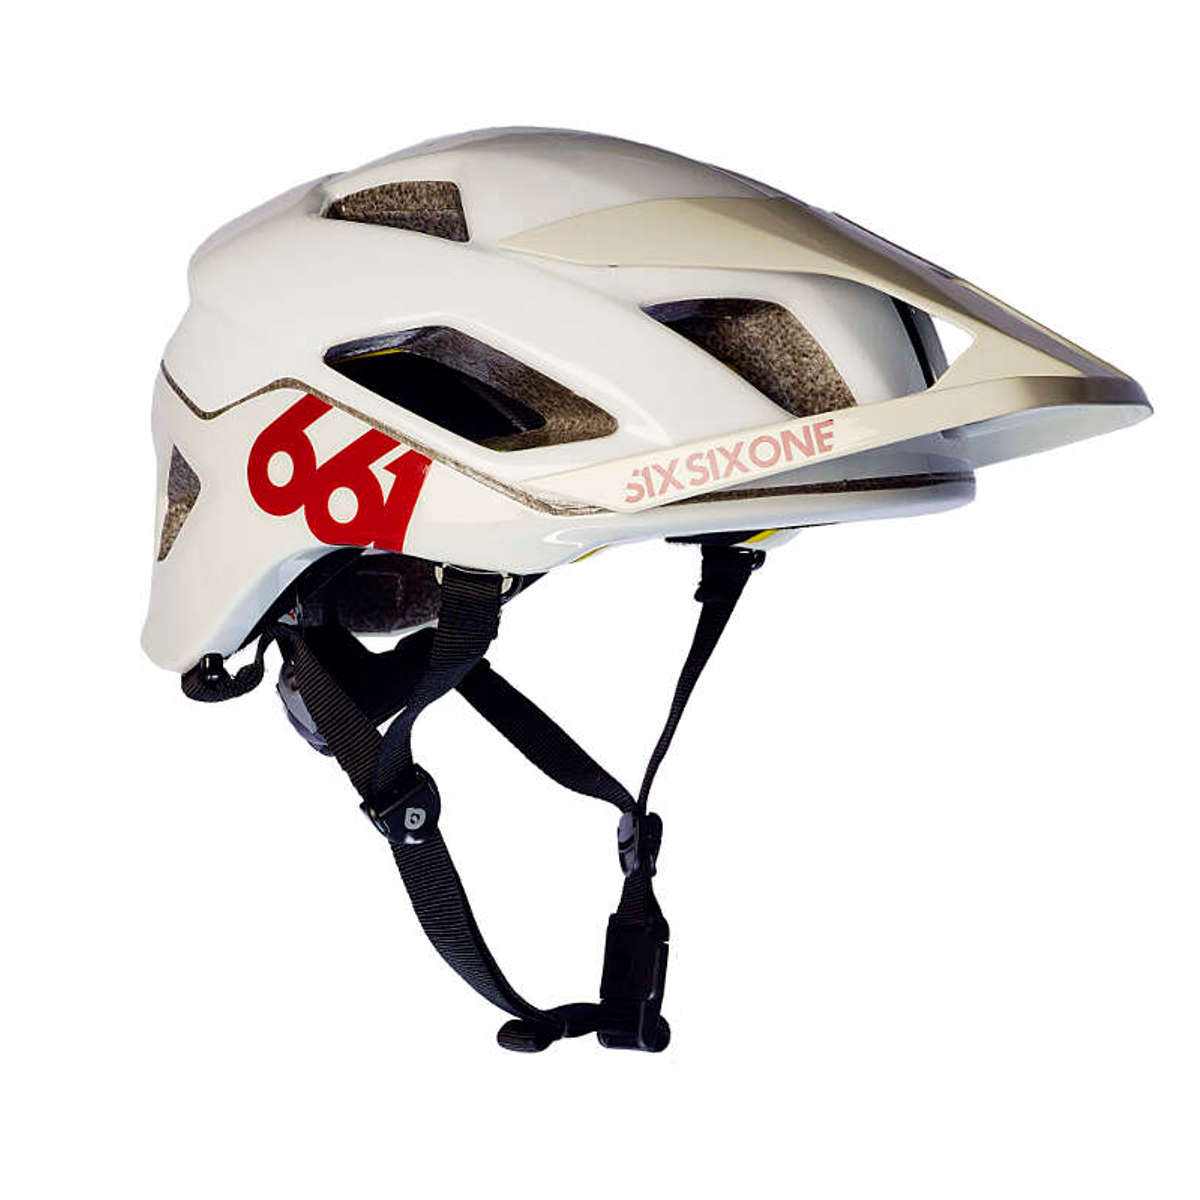 SixSixOne Enduro MTB Helmet Evo AM Tundra White